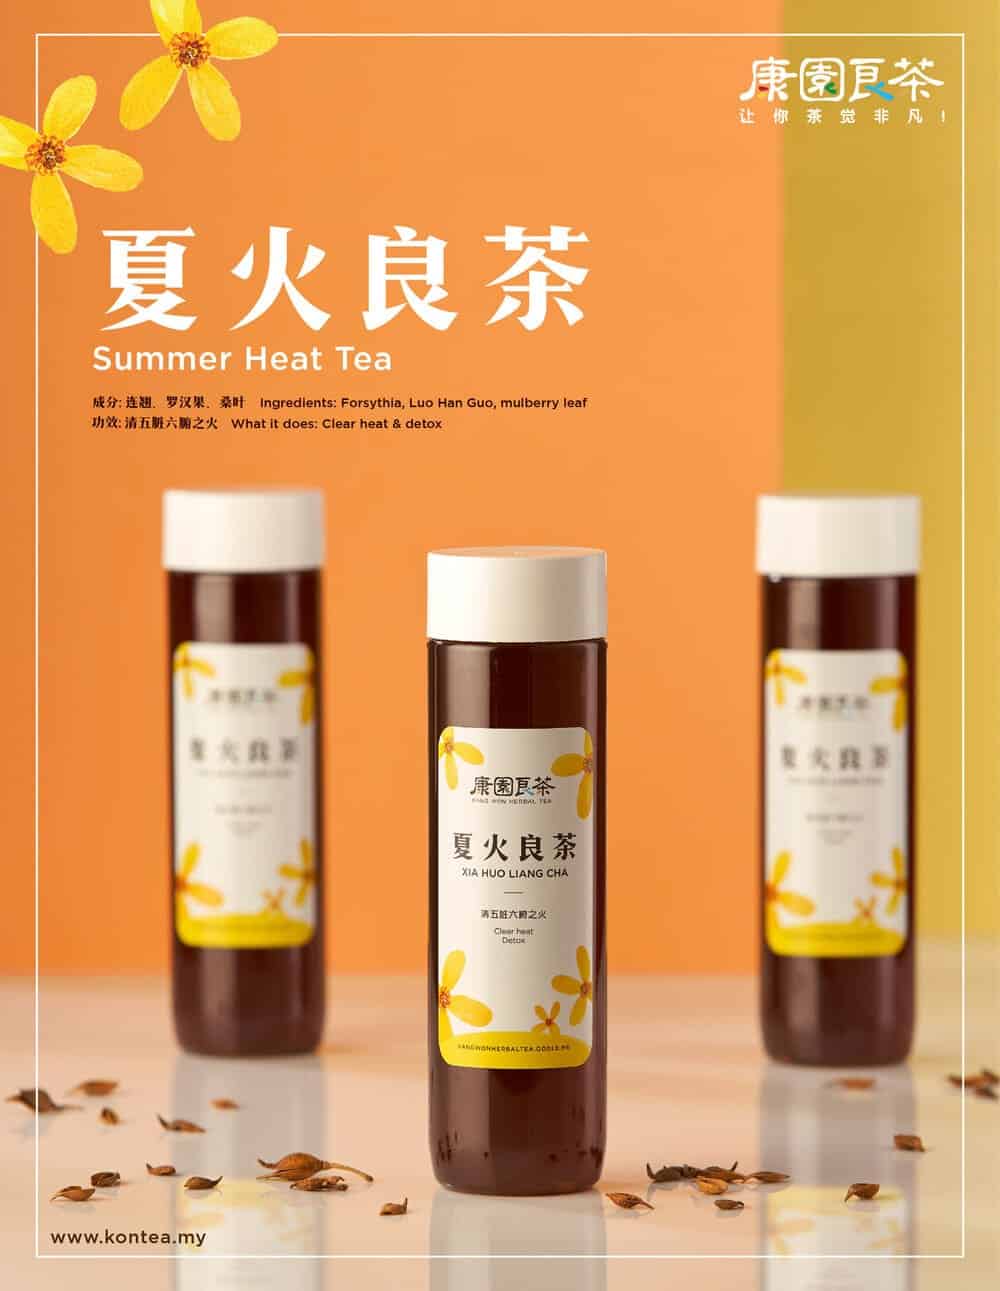 夏火良茶 Summer Heat Herbal Tea